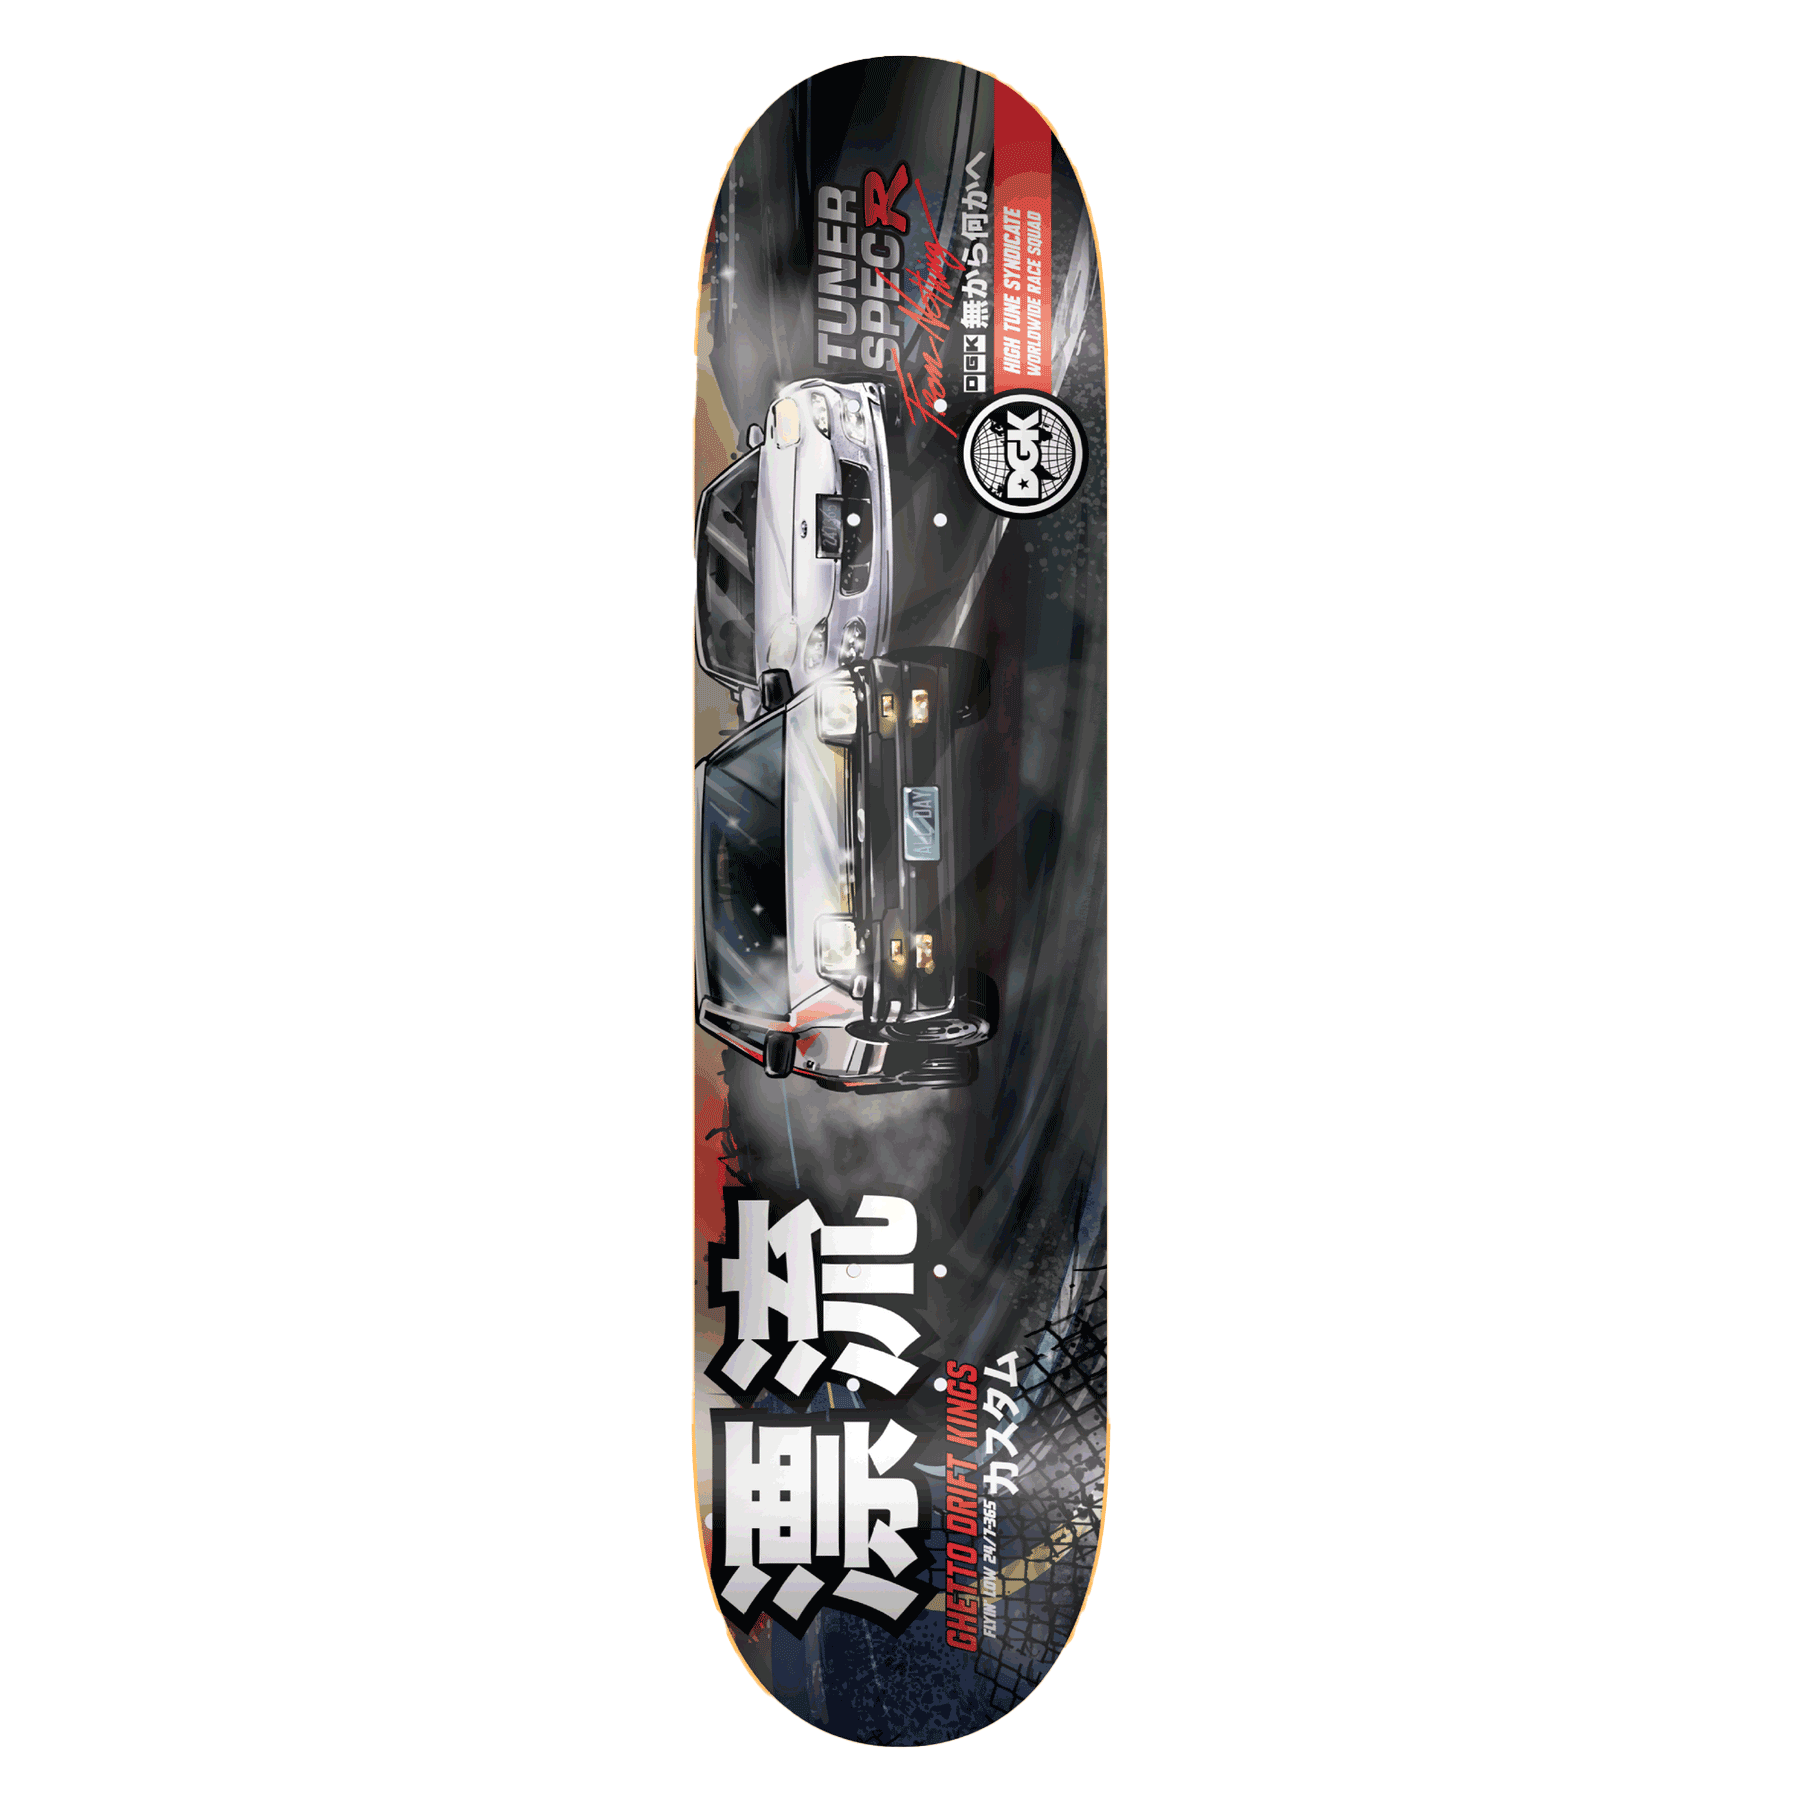 DGK Tuner Lenticular Skateboard Deck 8.25"